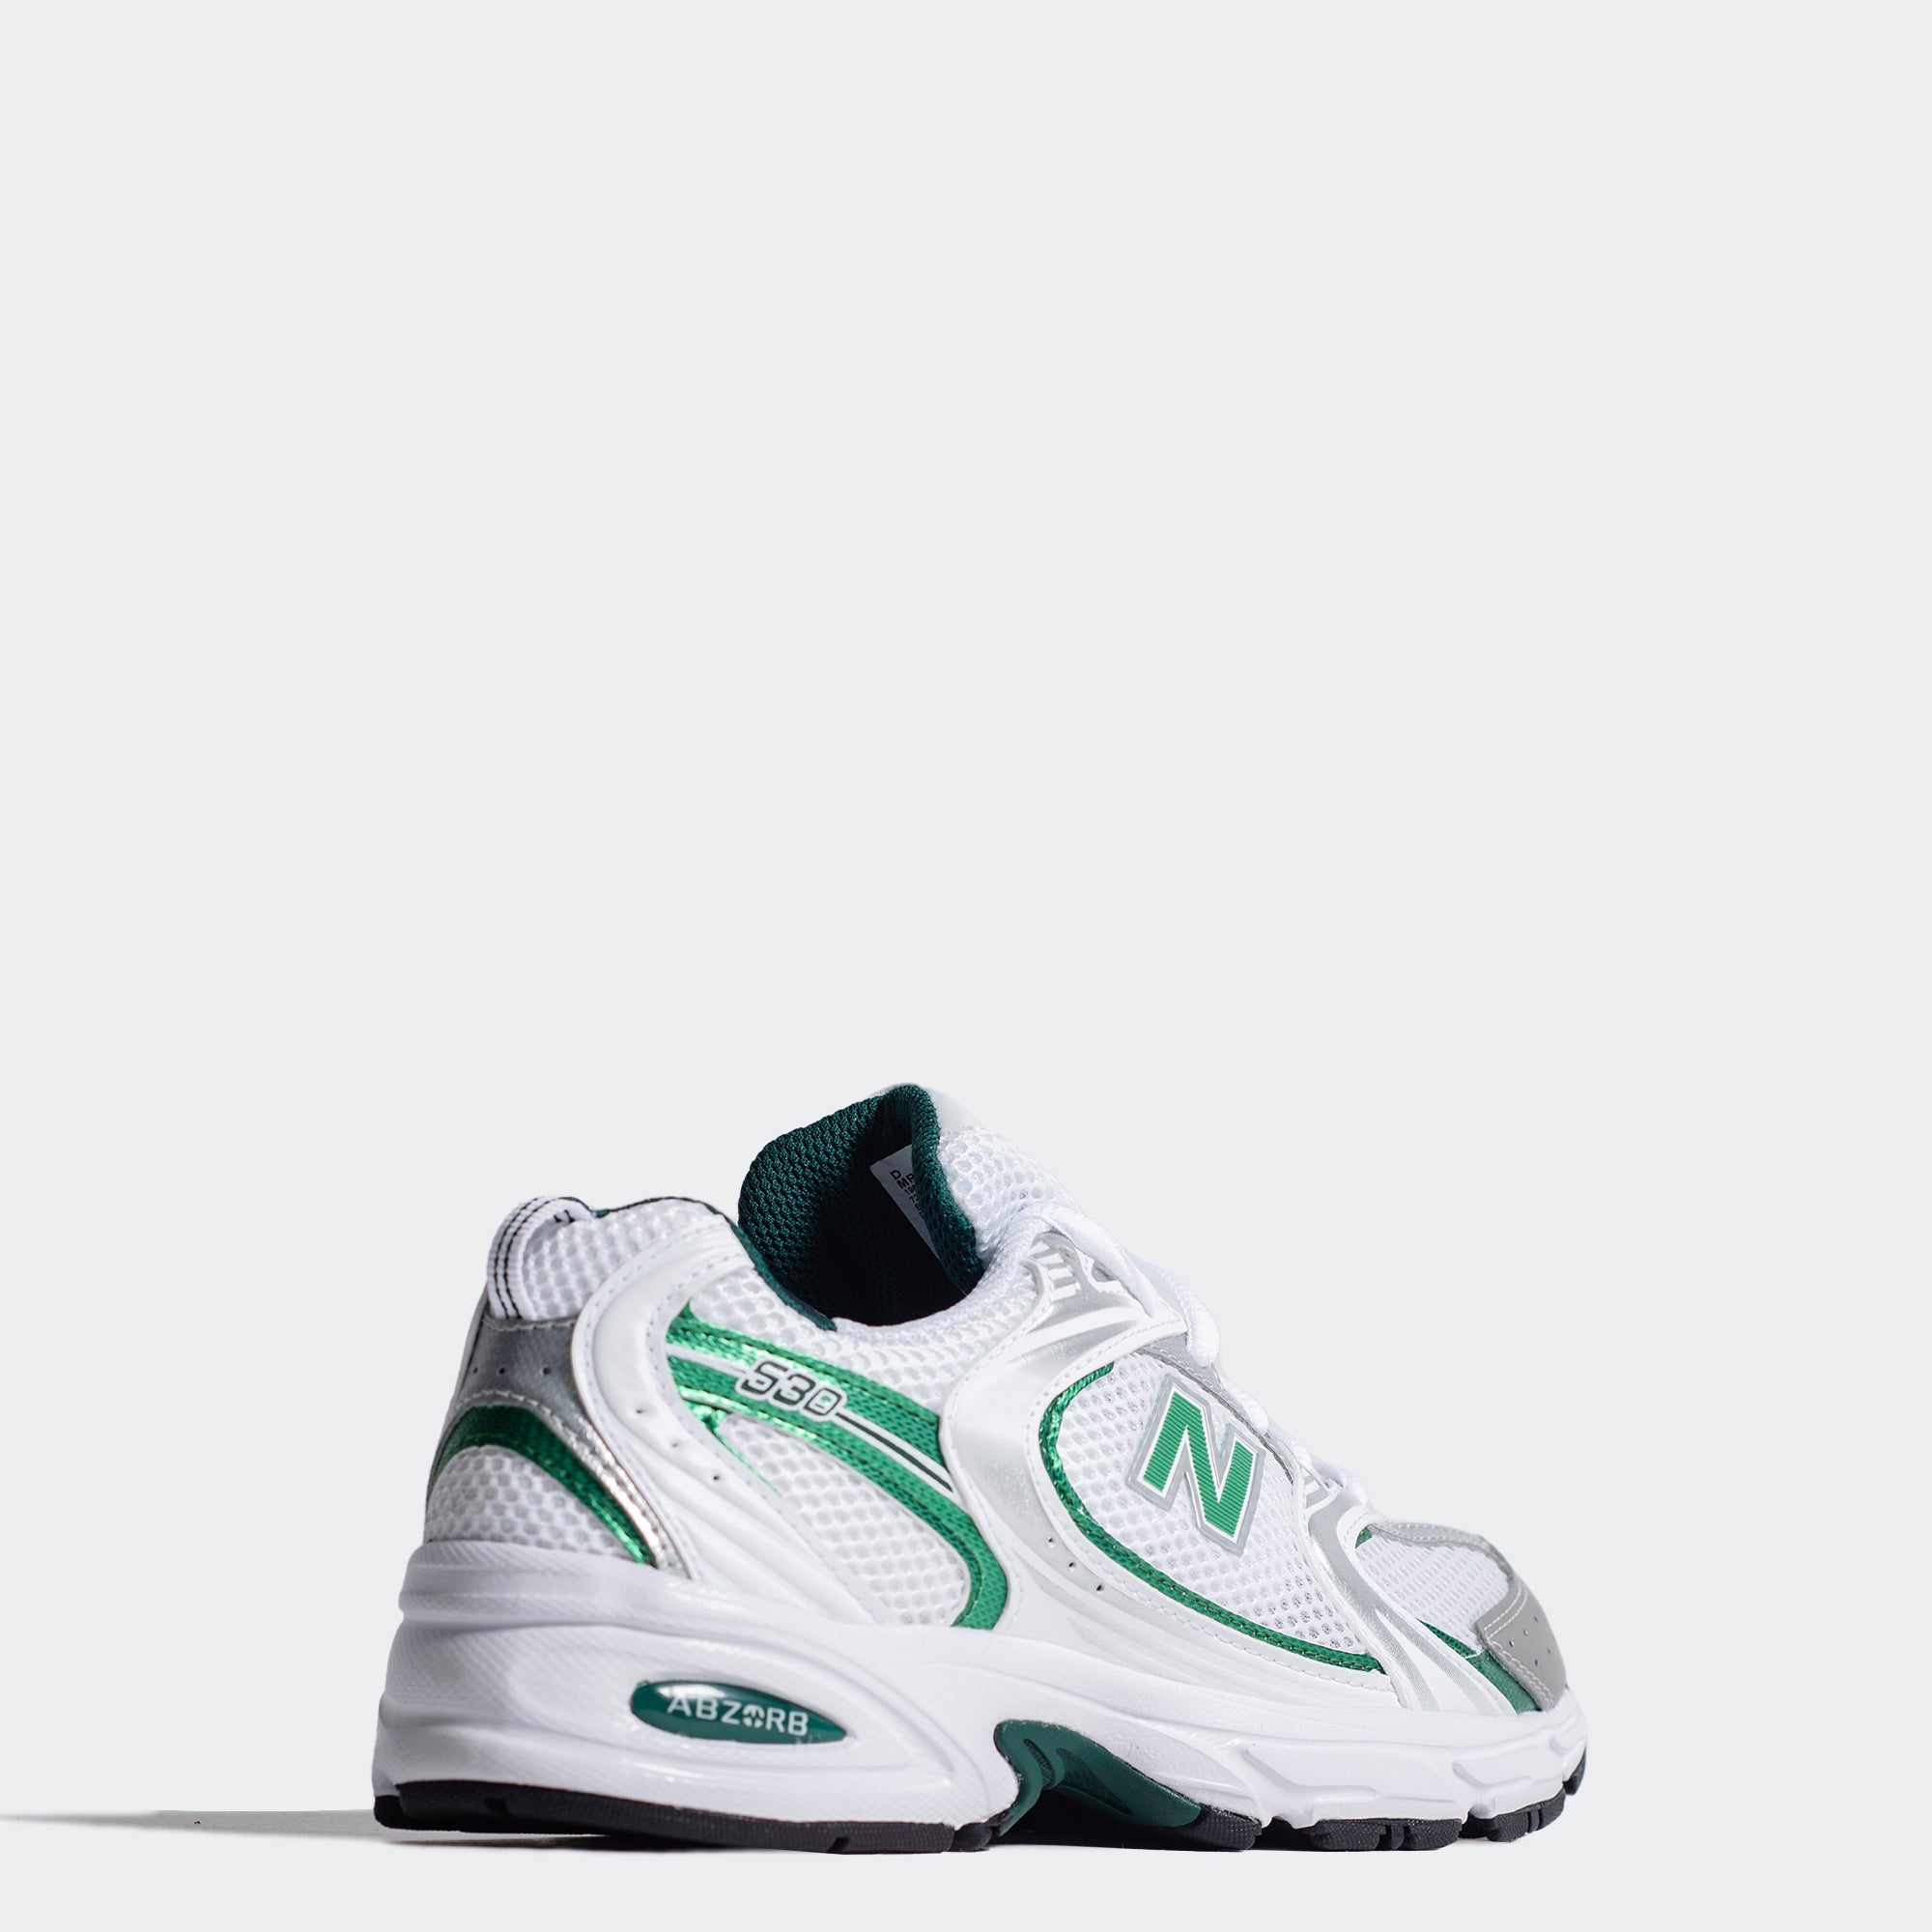 Hijsen Minister leven Men's New Balance 530 Shoes White Green | Chicago City Sports